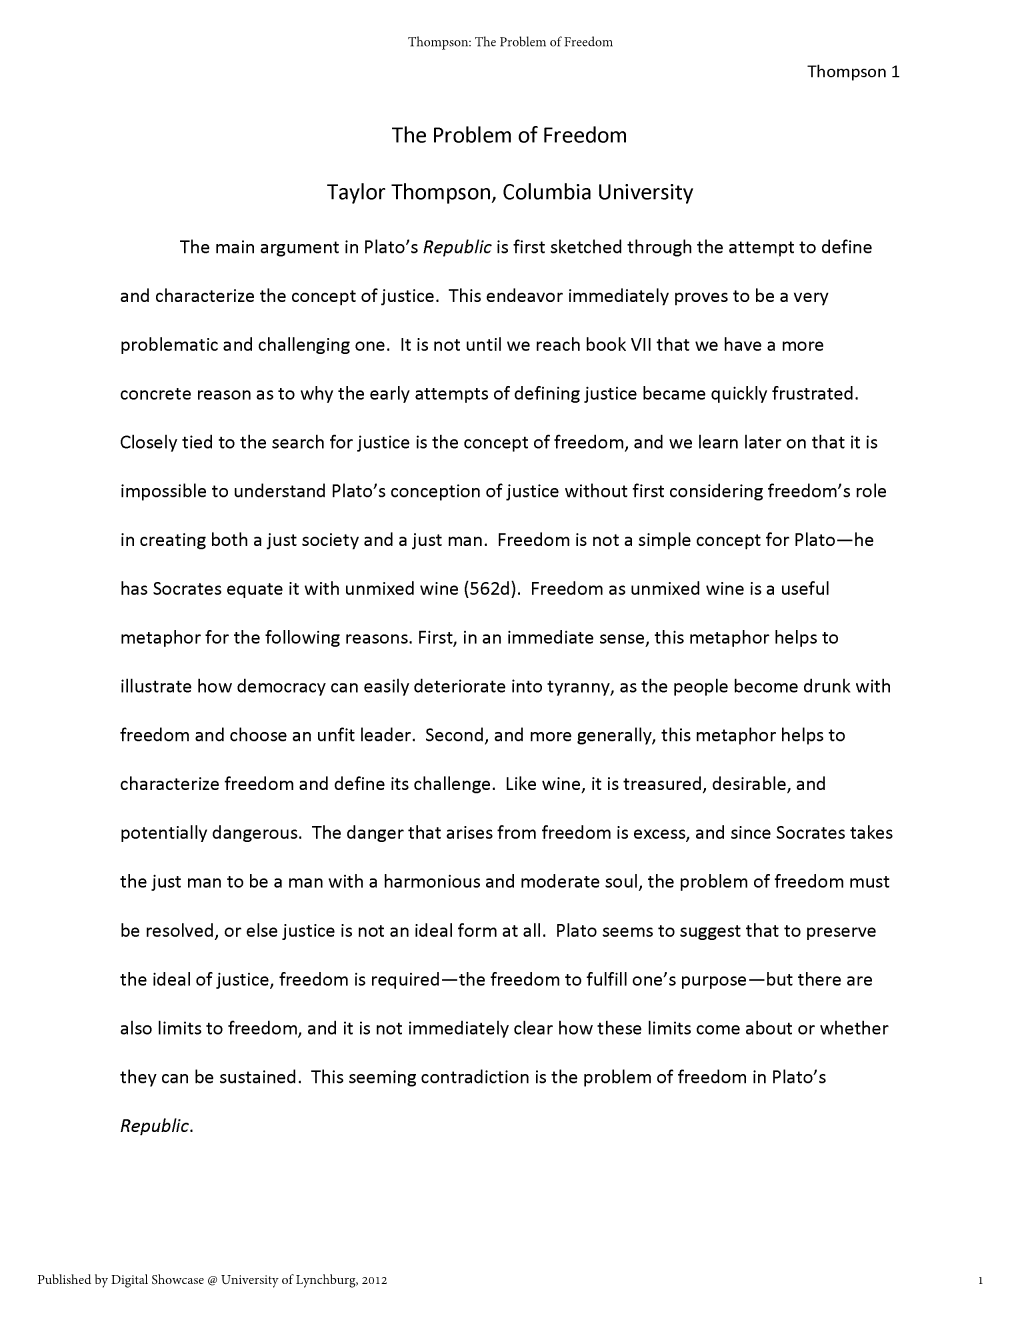 The Problem of Freedom Taylor Thompson, Columbia University